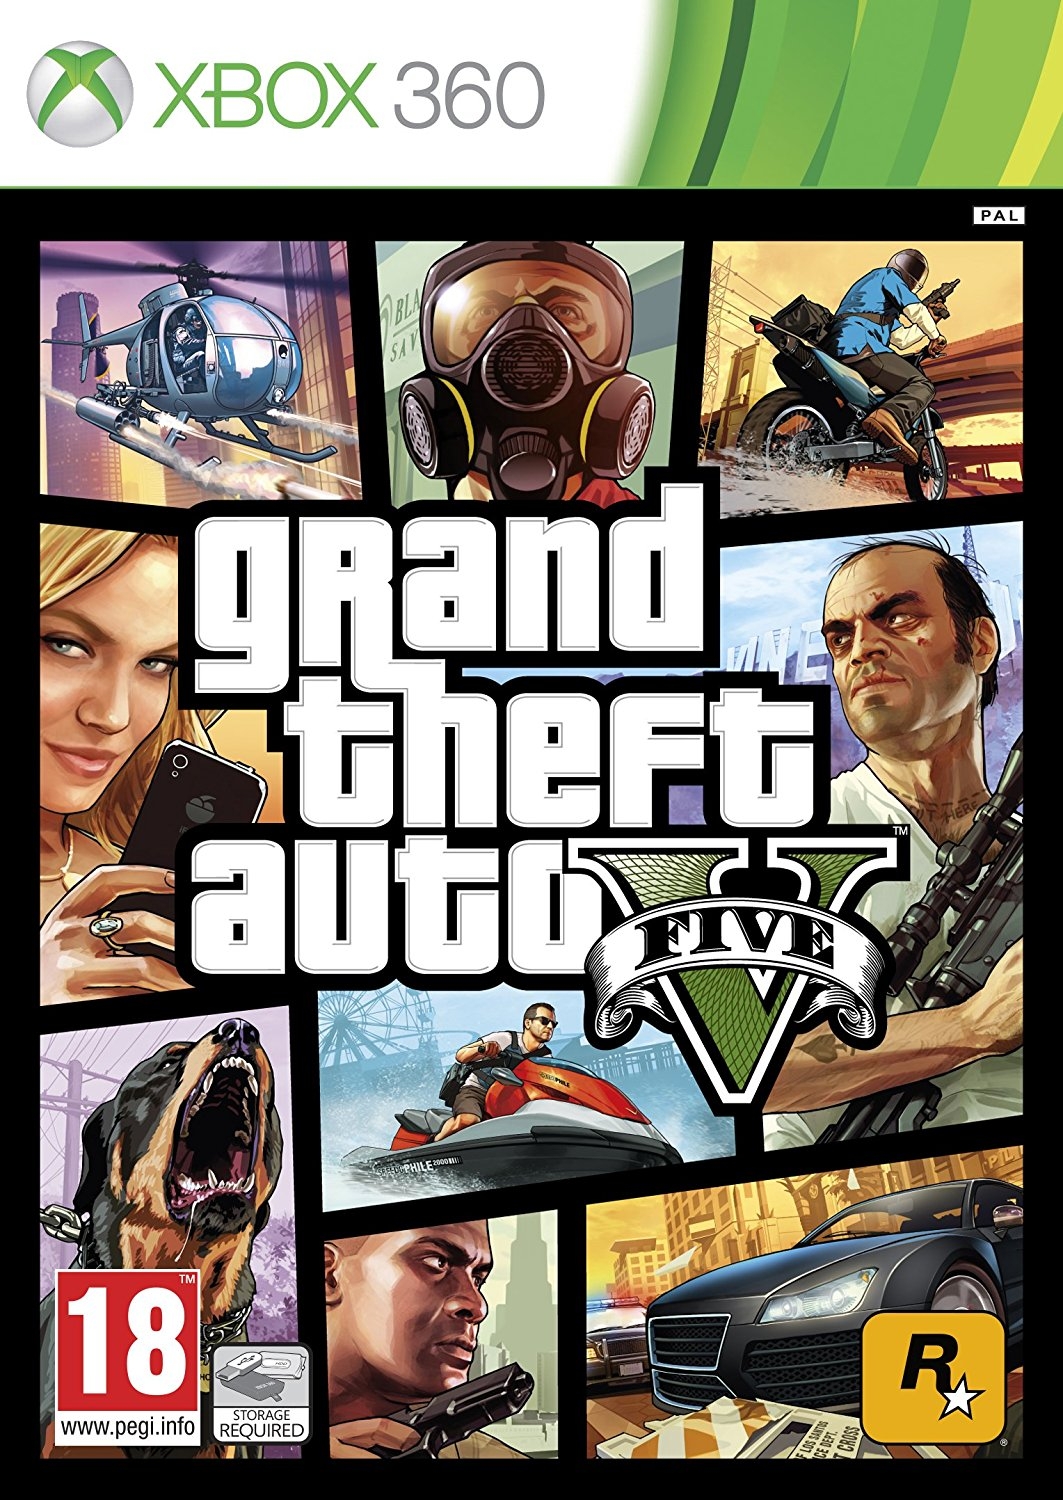 XBOX360 Grand Theft Auto 5